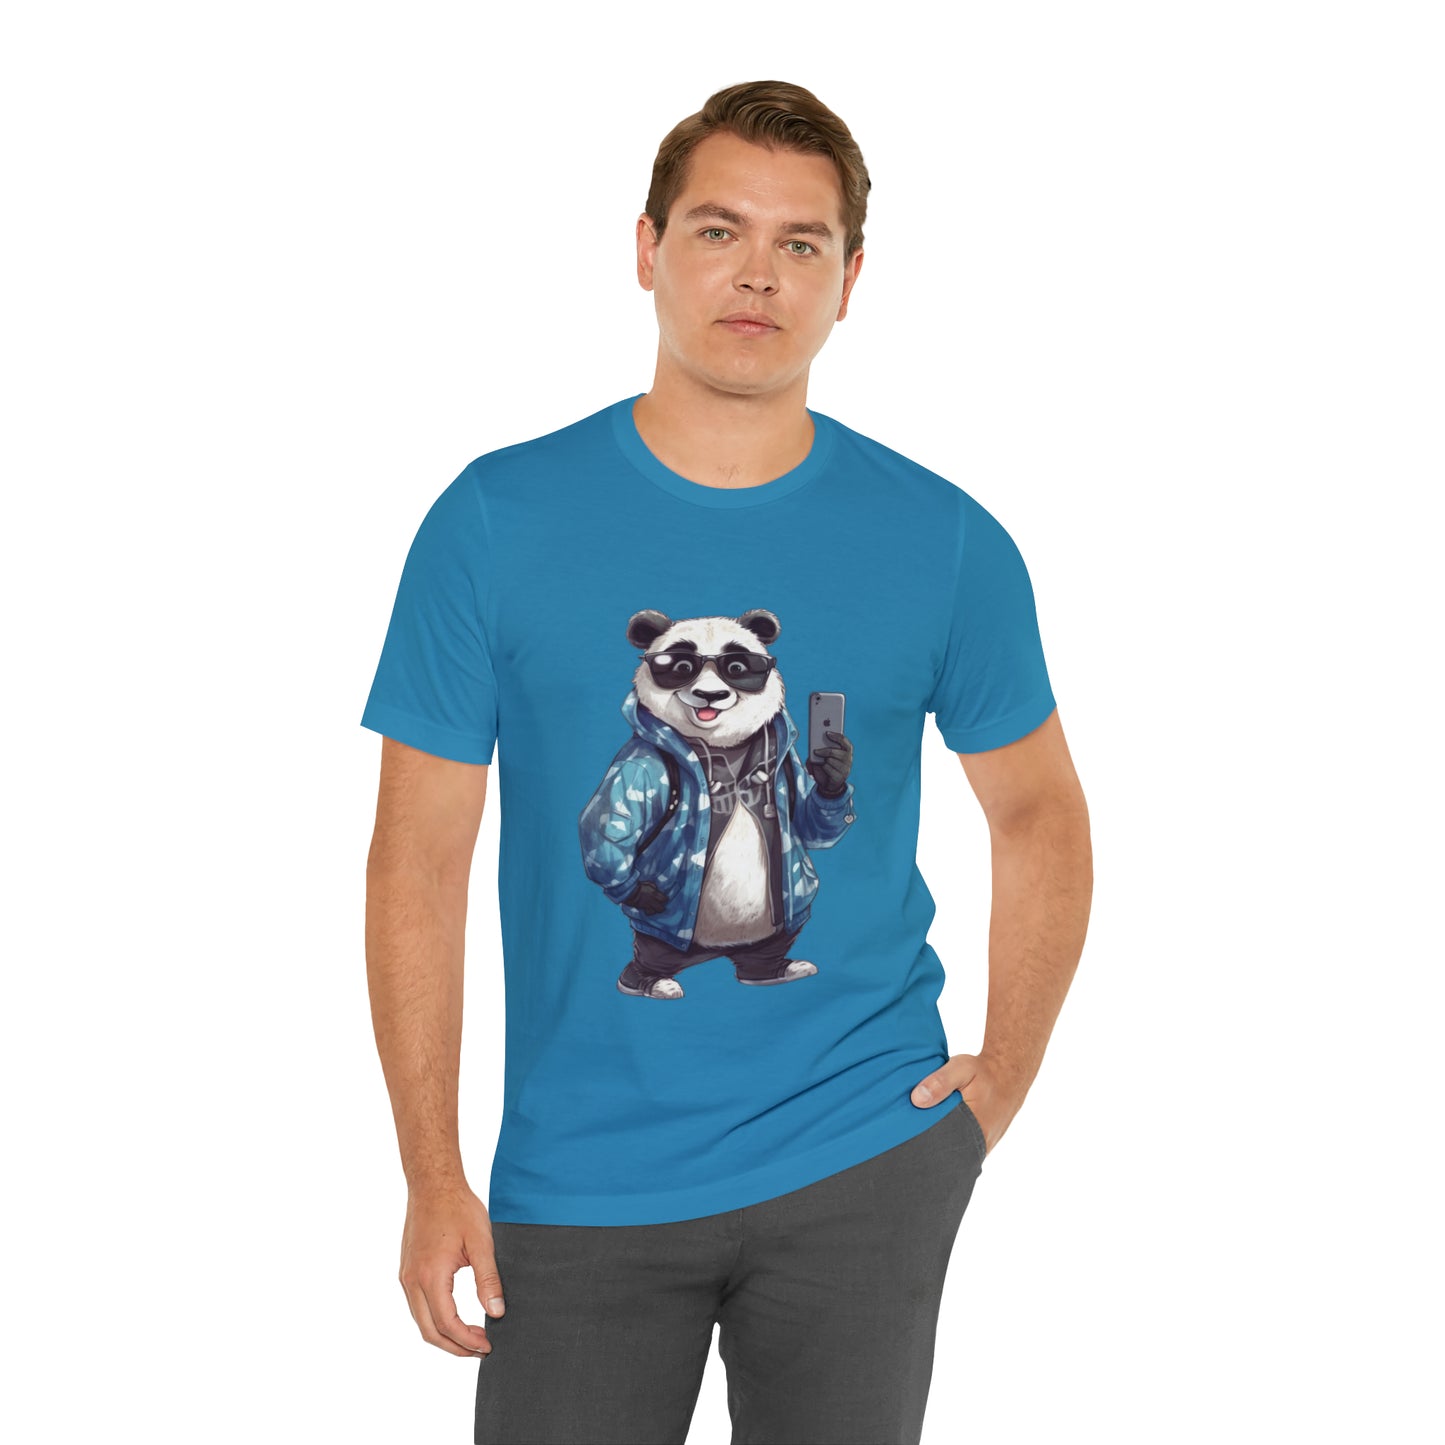 "Trendy Panda Selfie" Unisex Jersey Short Sleeve Tee